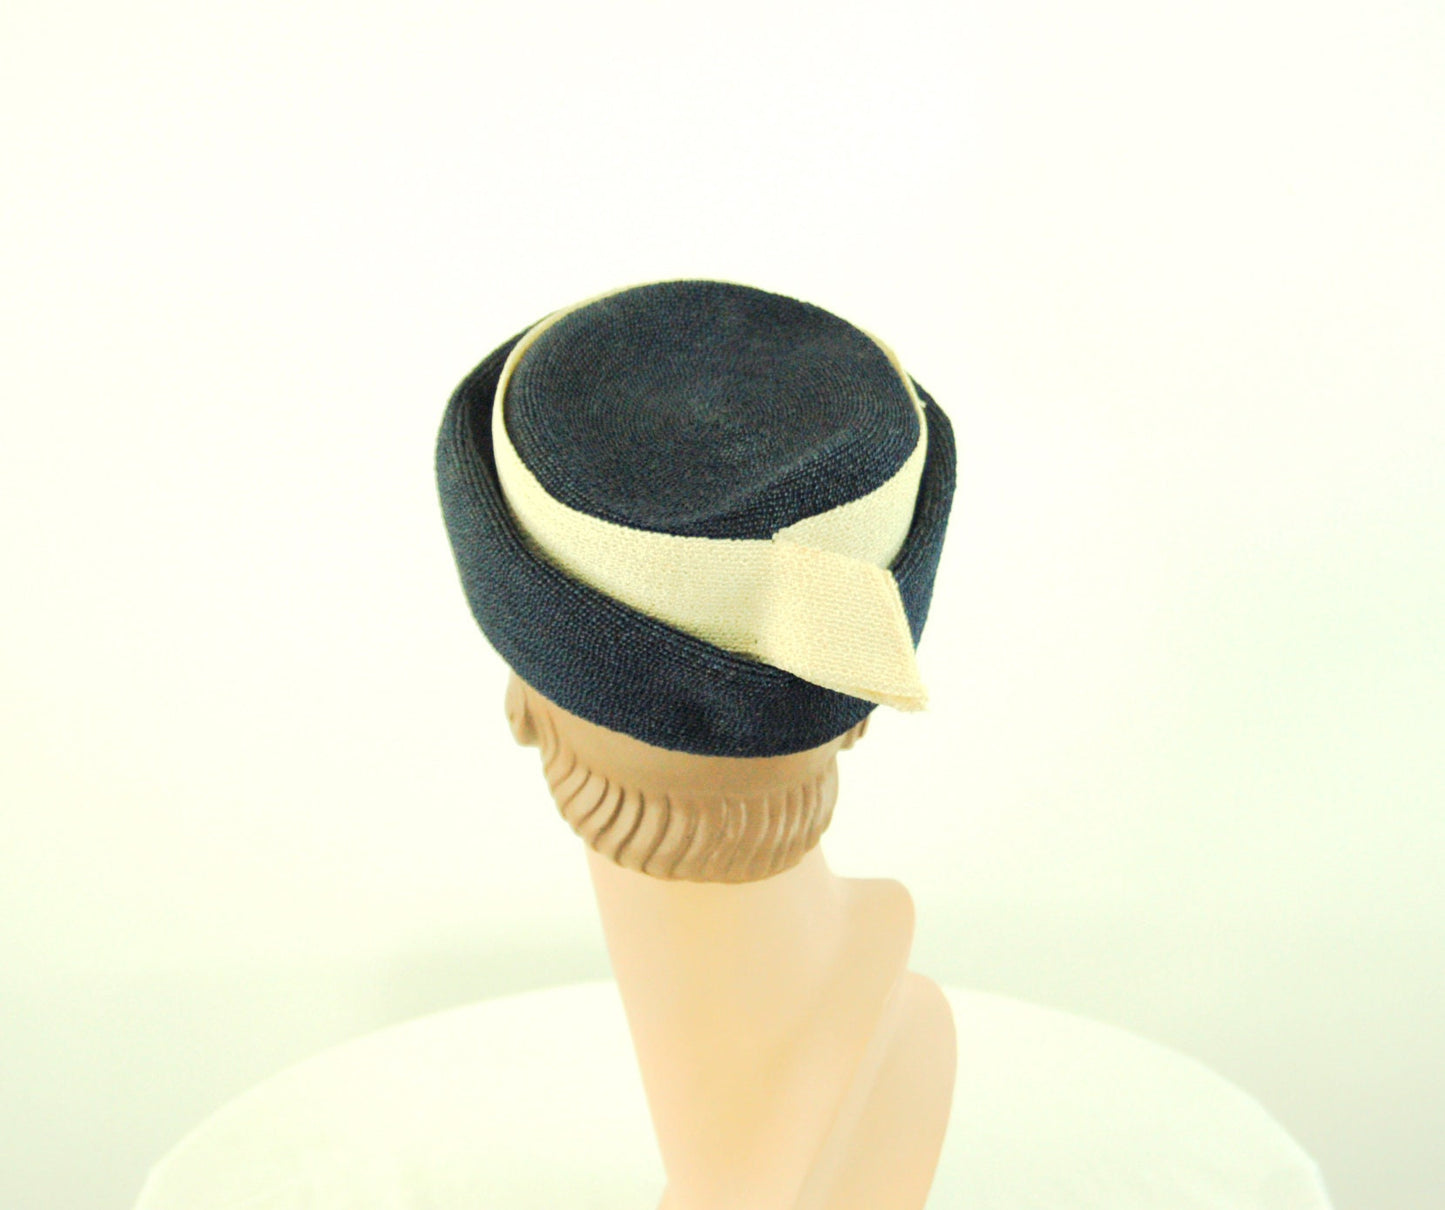 1960s hat breton style navy blue white striped straw hat size 21.5